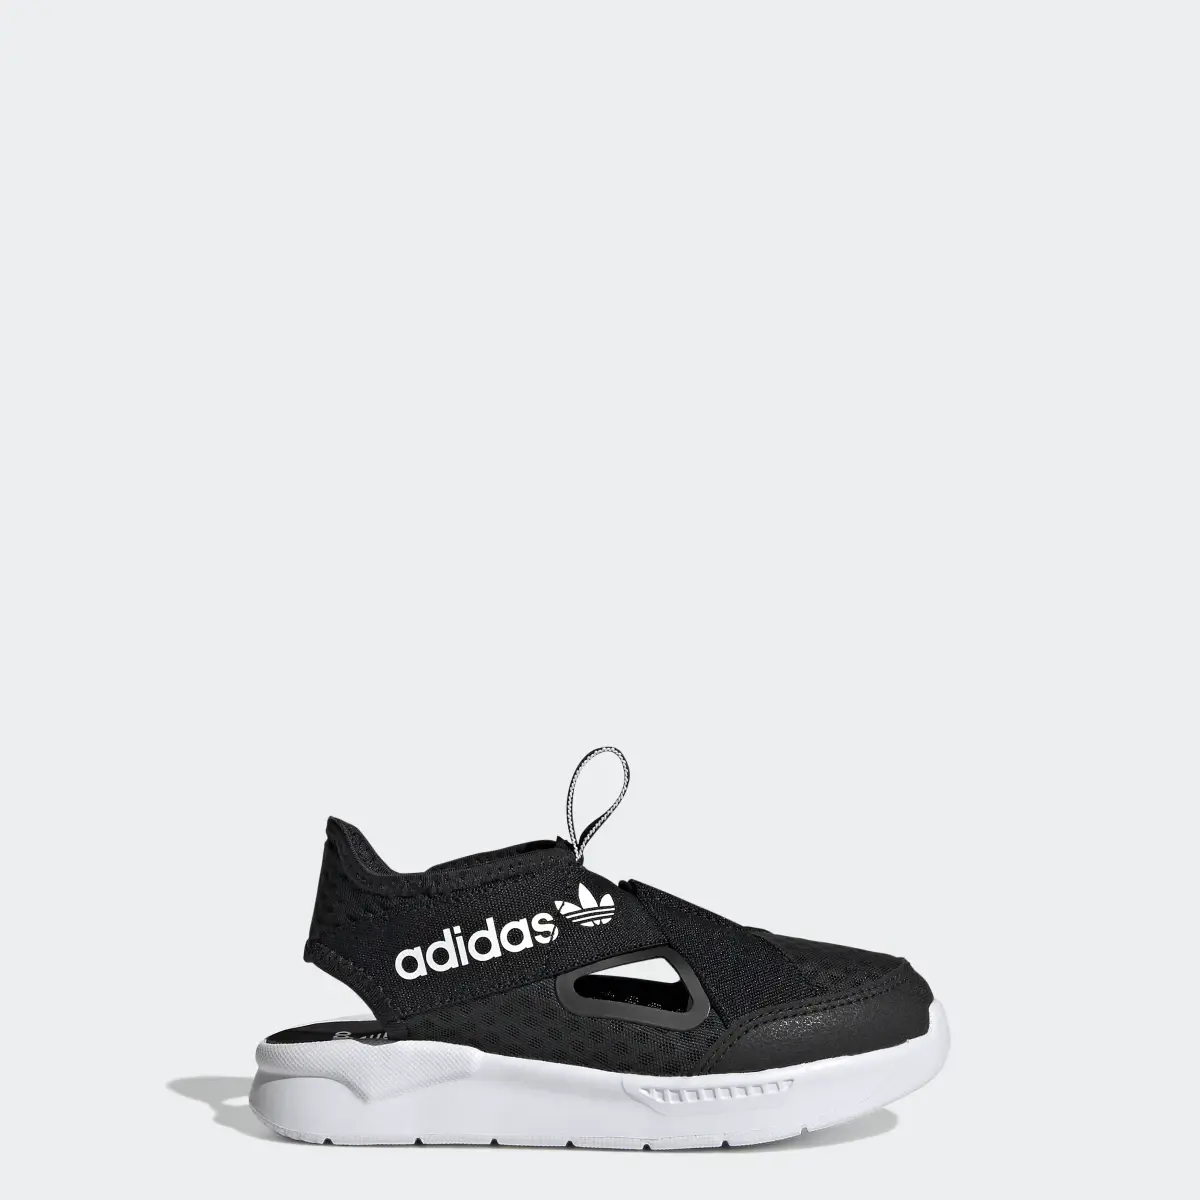 Adidas 360 Sandals. 1